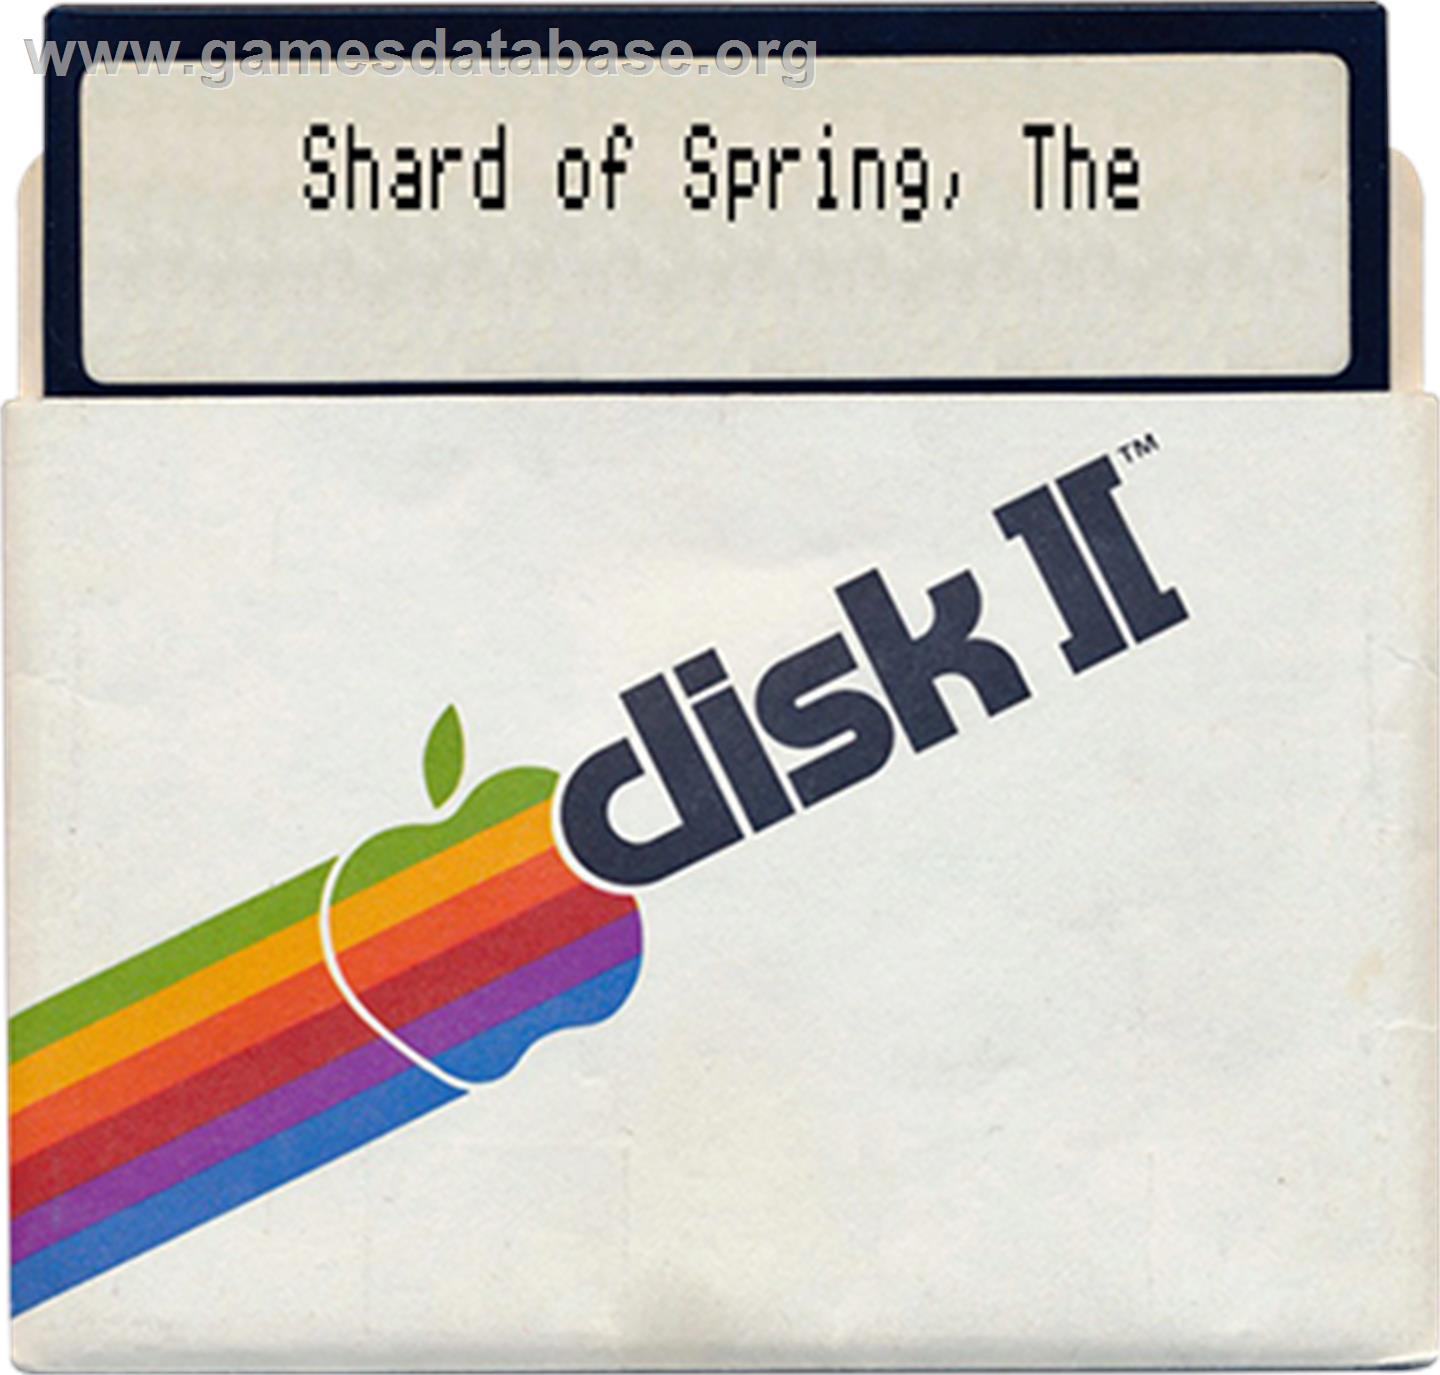 Shard of Spring - Apple II - Artwork - Disc